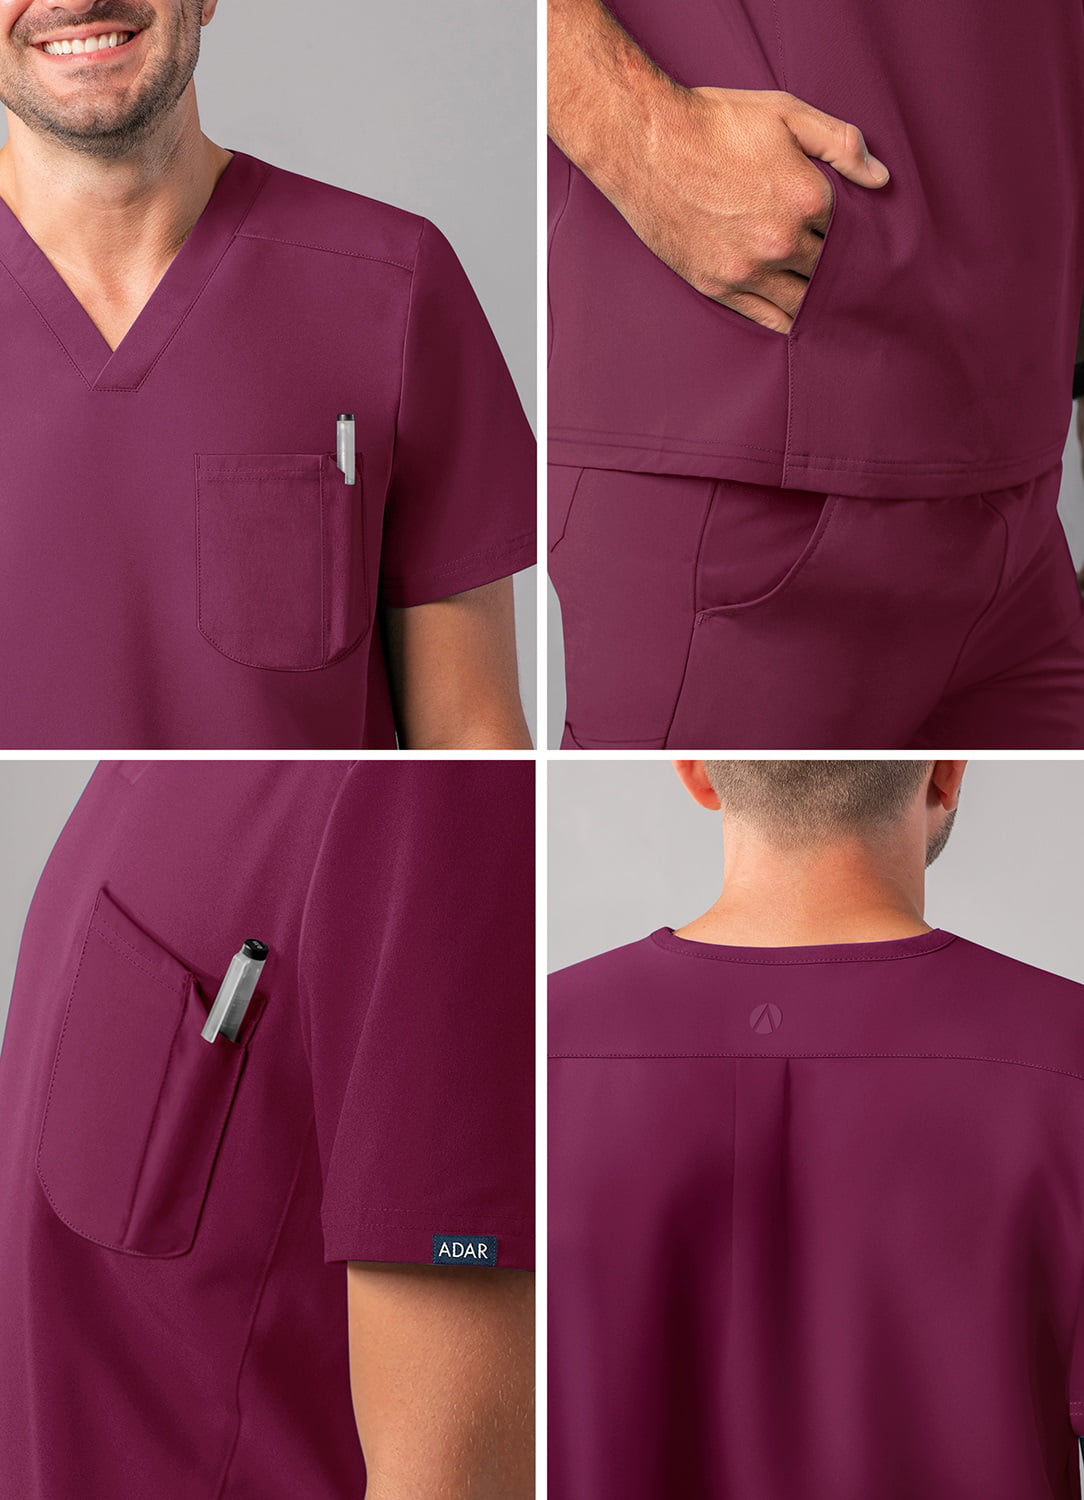 Adar Addition Scrubs for Men - Modern Multi Pocket V-Neck Scrub Top - A6010  - White - 2X